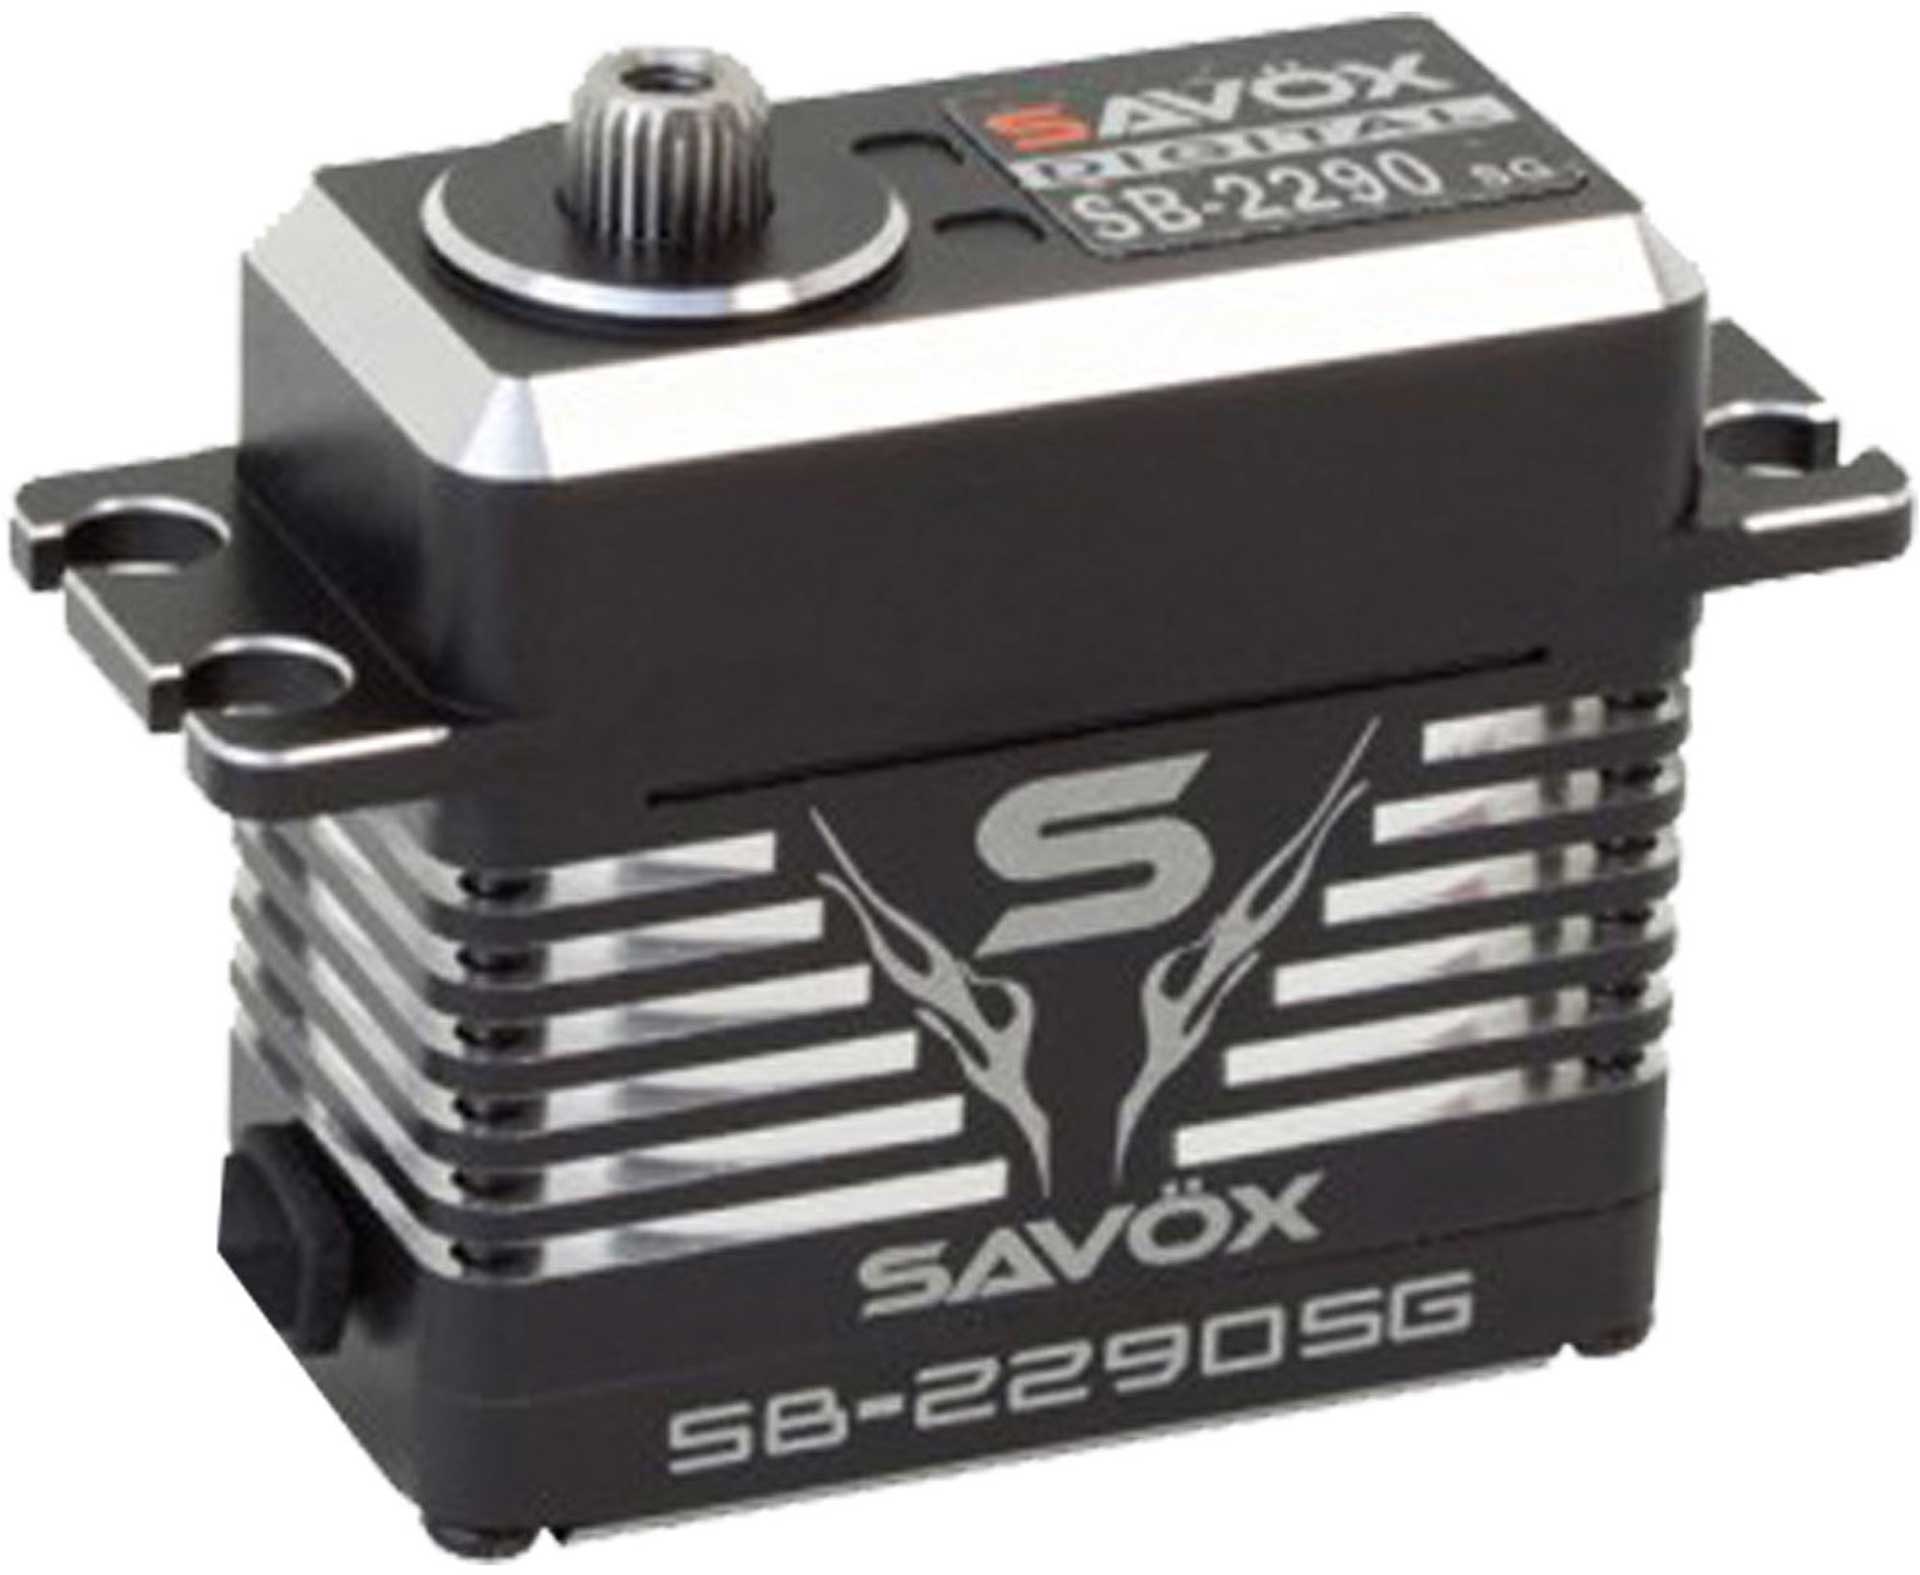 SAVÖX SB-2290SG (7,4V/50KG/0,11s) DIGITAL HV BRUSHLESS SERVO BLACK LINE